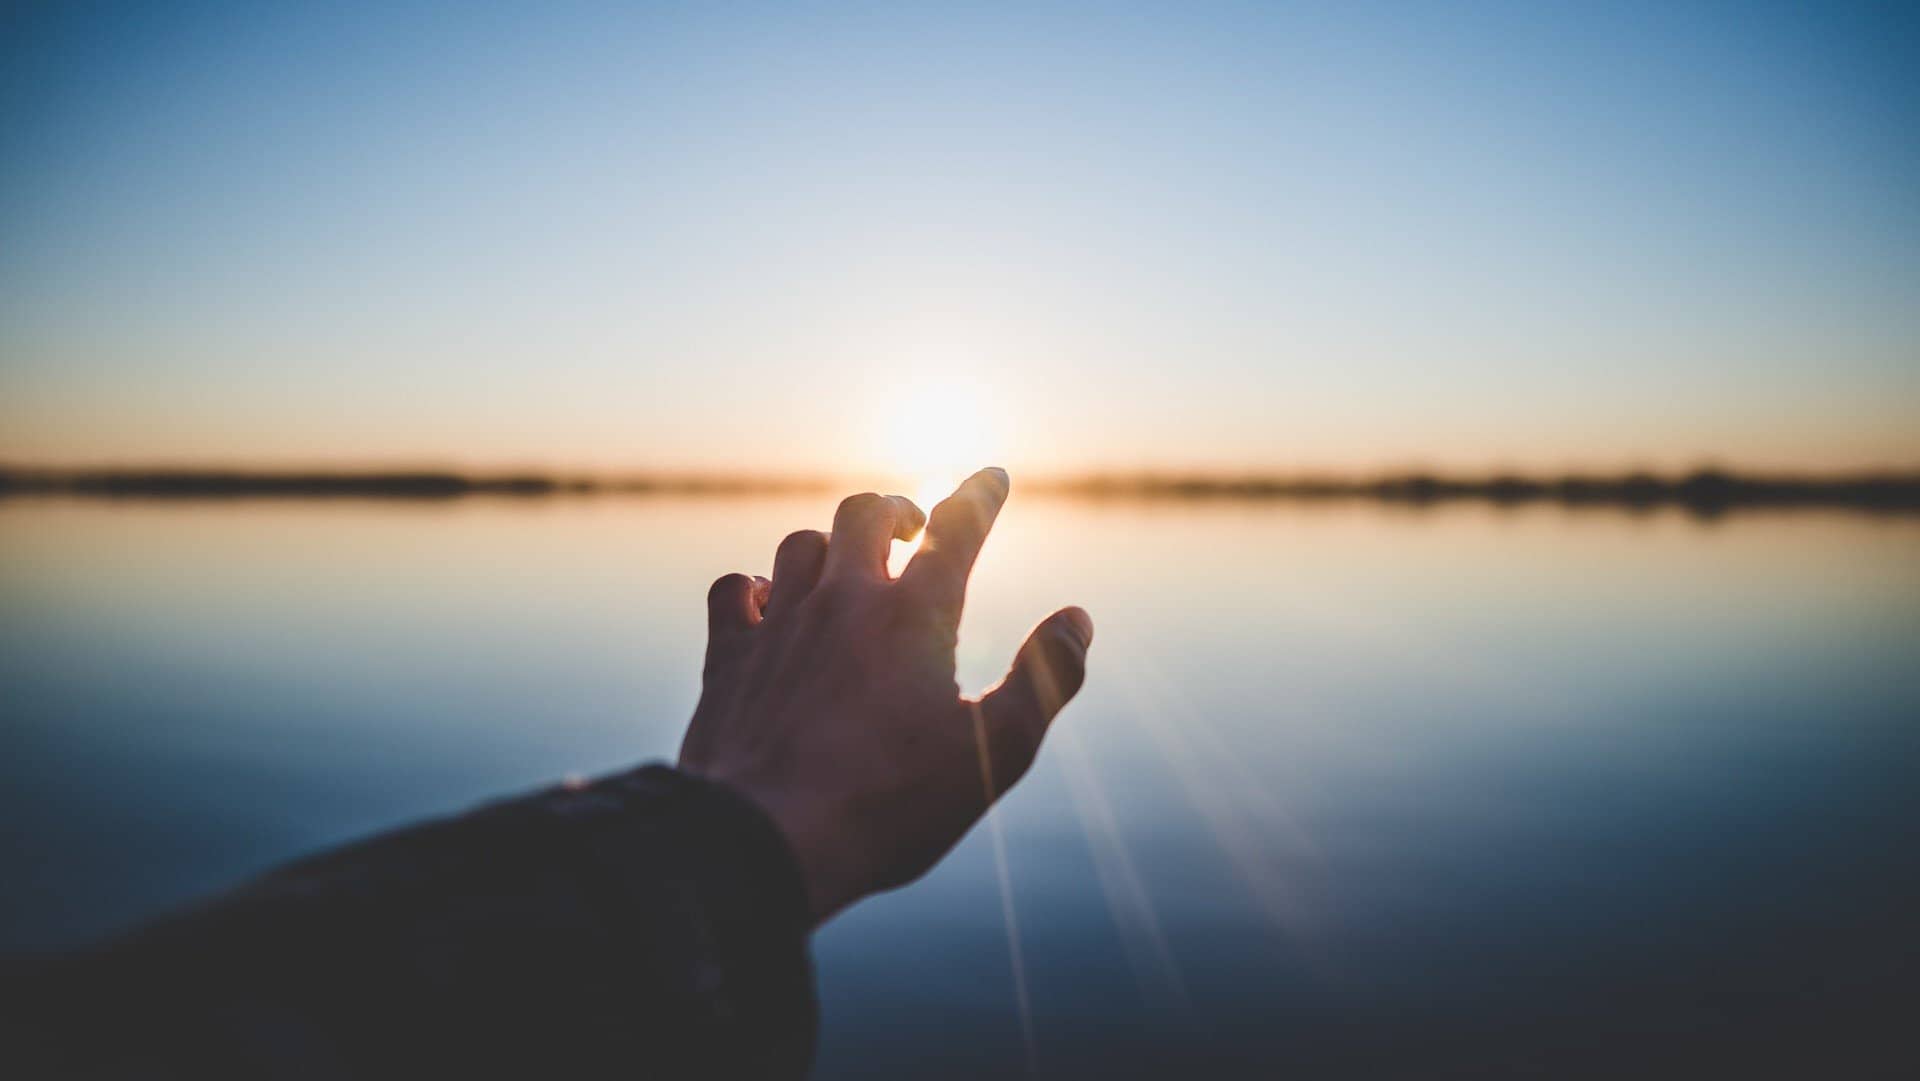 person extending their hand toward the sun near a body of water.